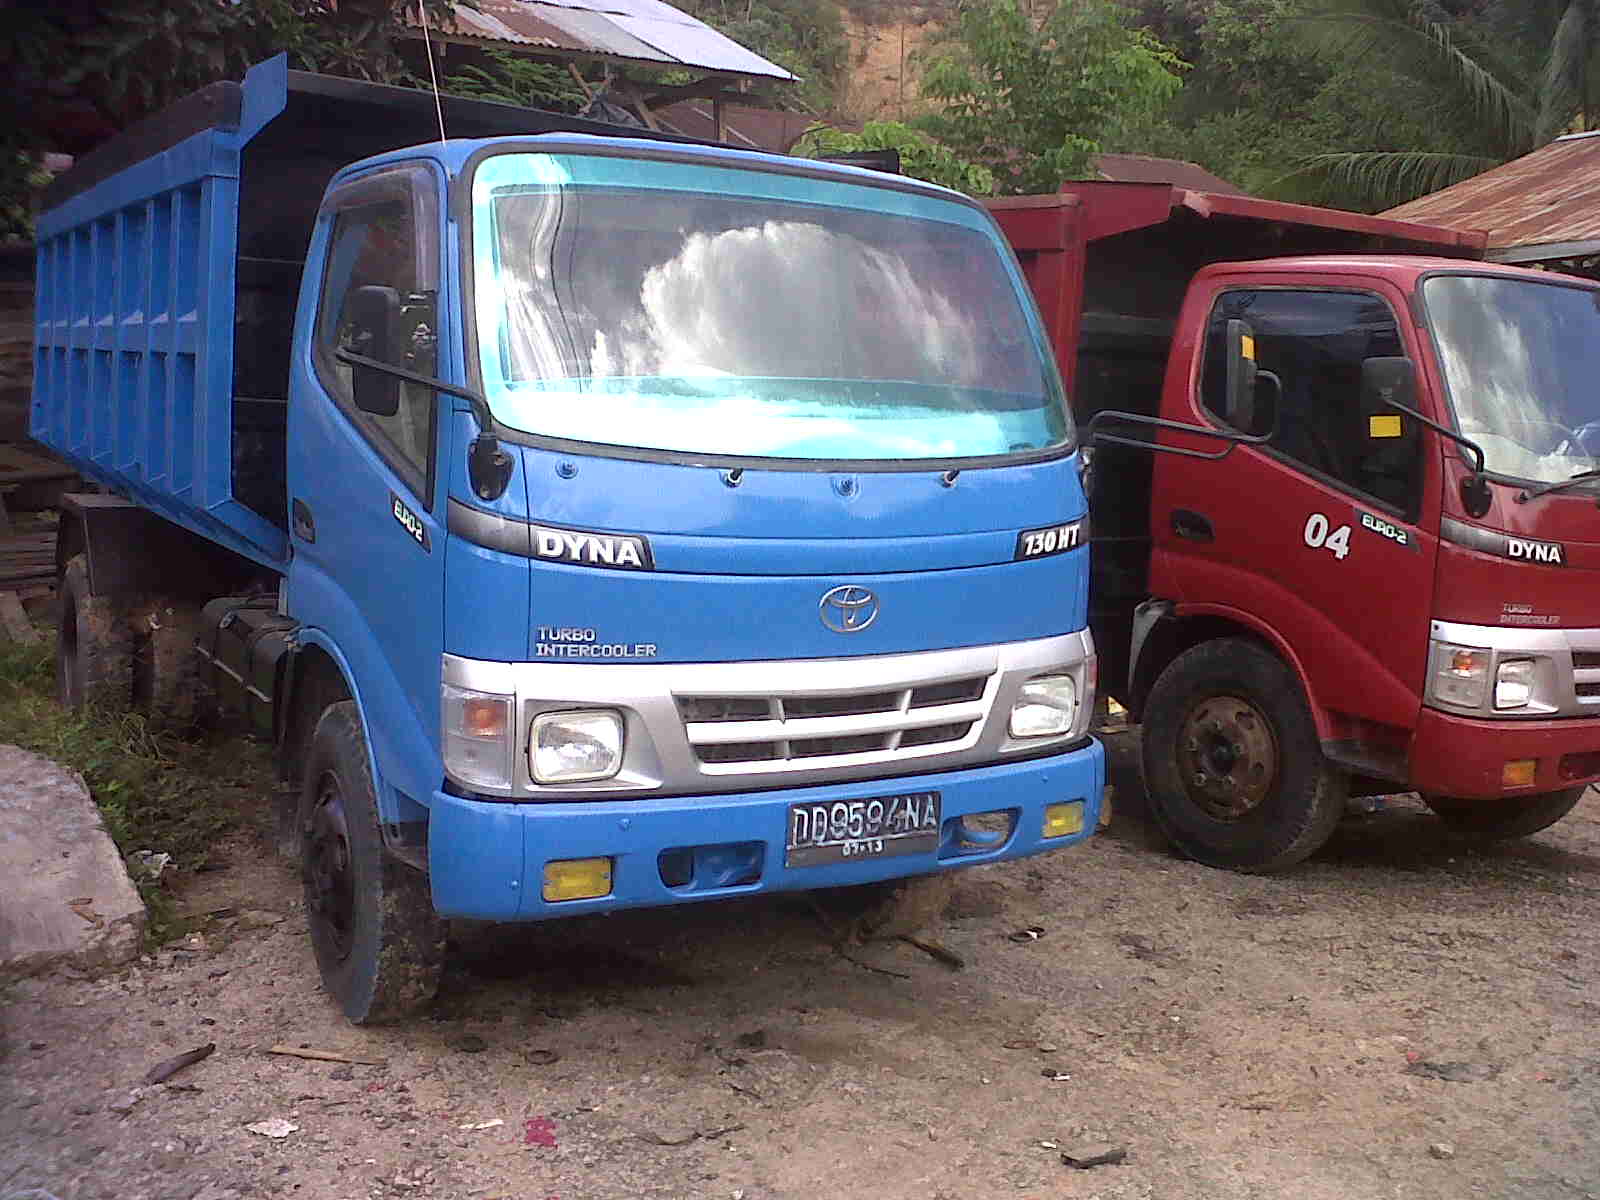 IKLAN BISNIS SAMARINDA Dijual Dump Truck Toyota Dyna 2008 2009